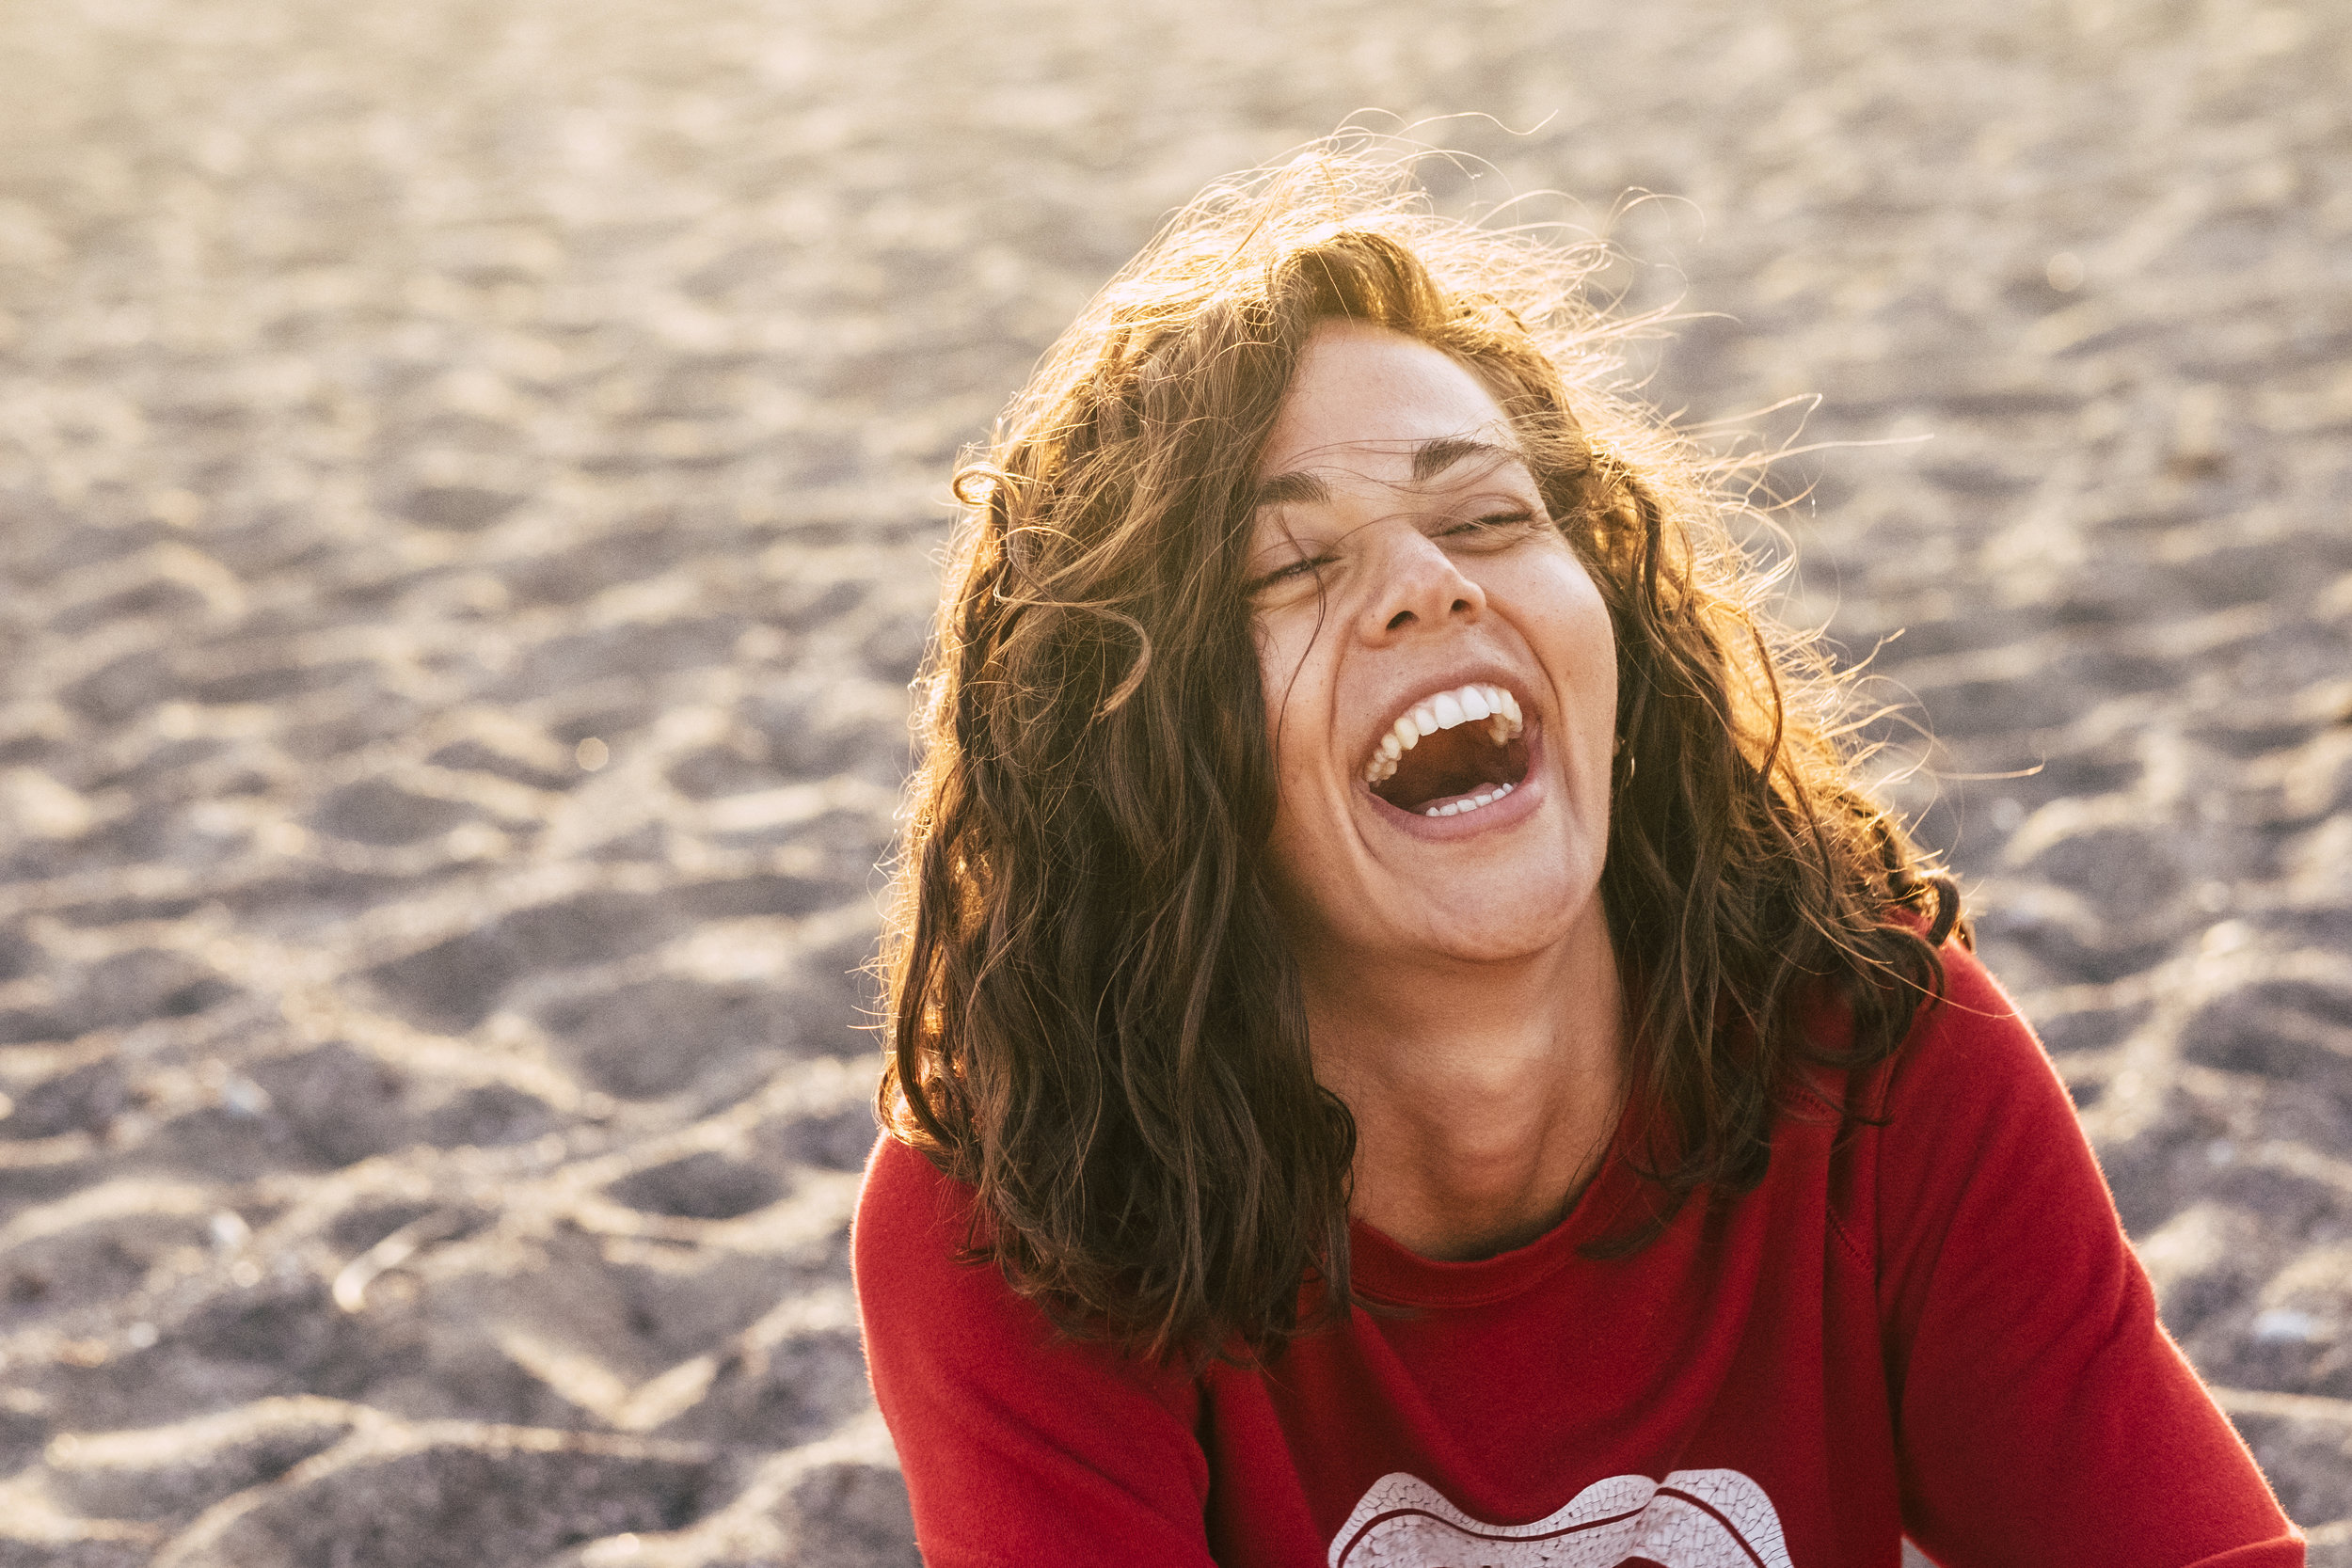 Girl Laughing on Beach